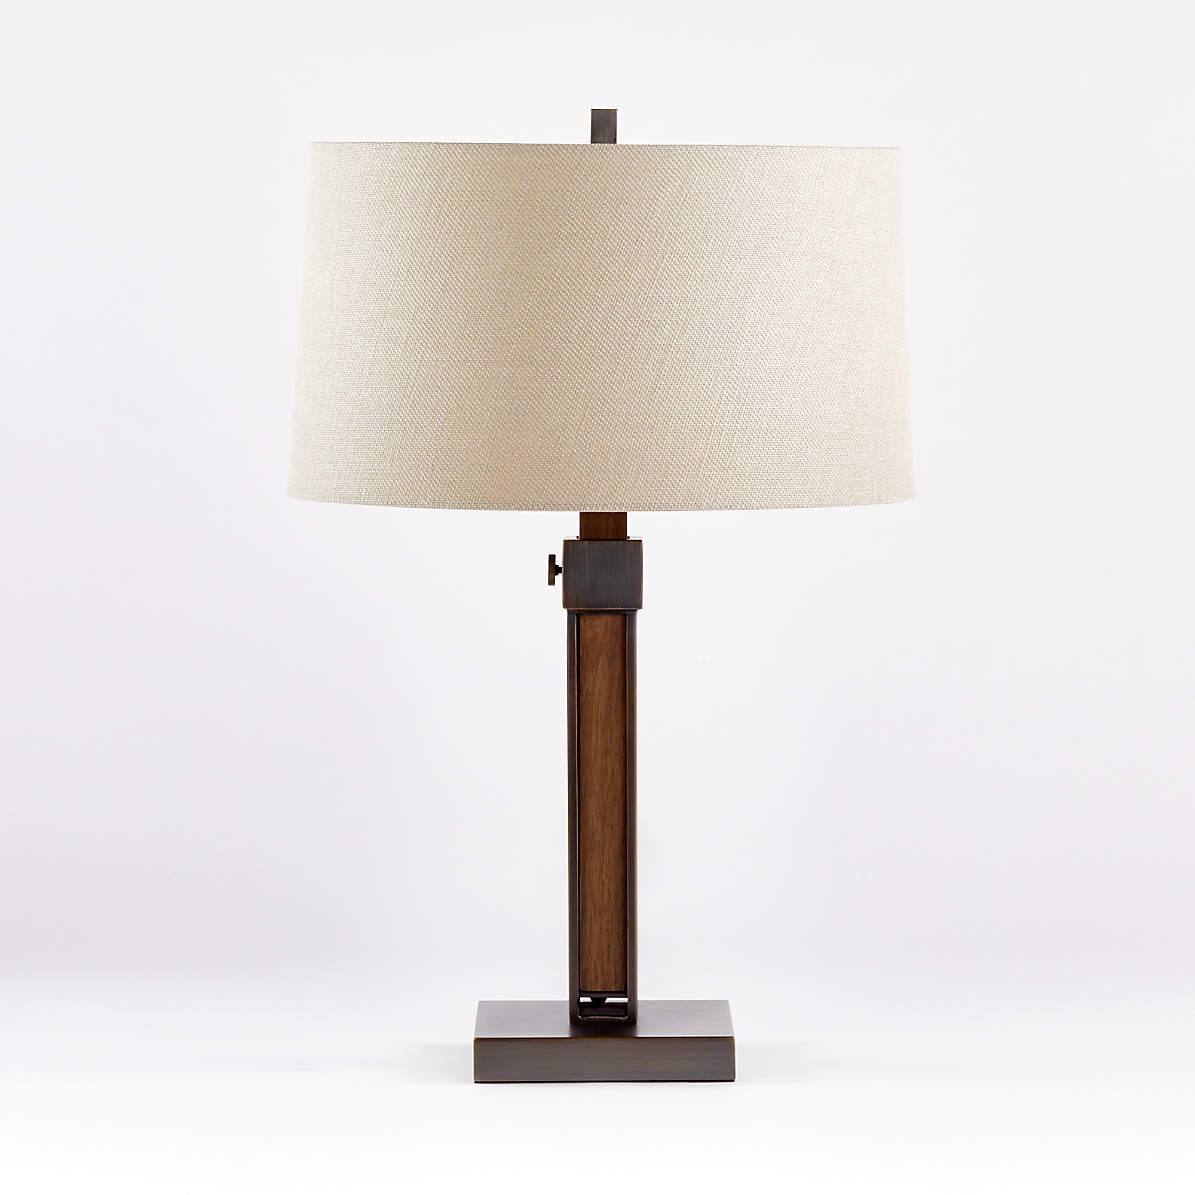 bronze table lamp shade